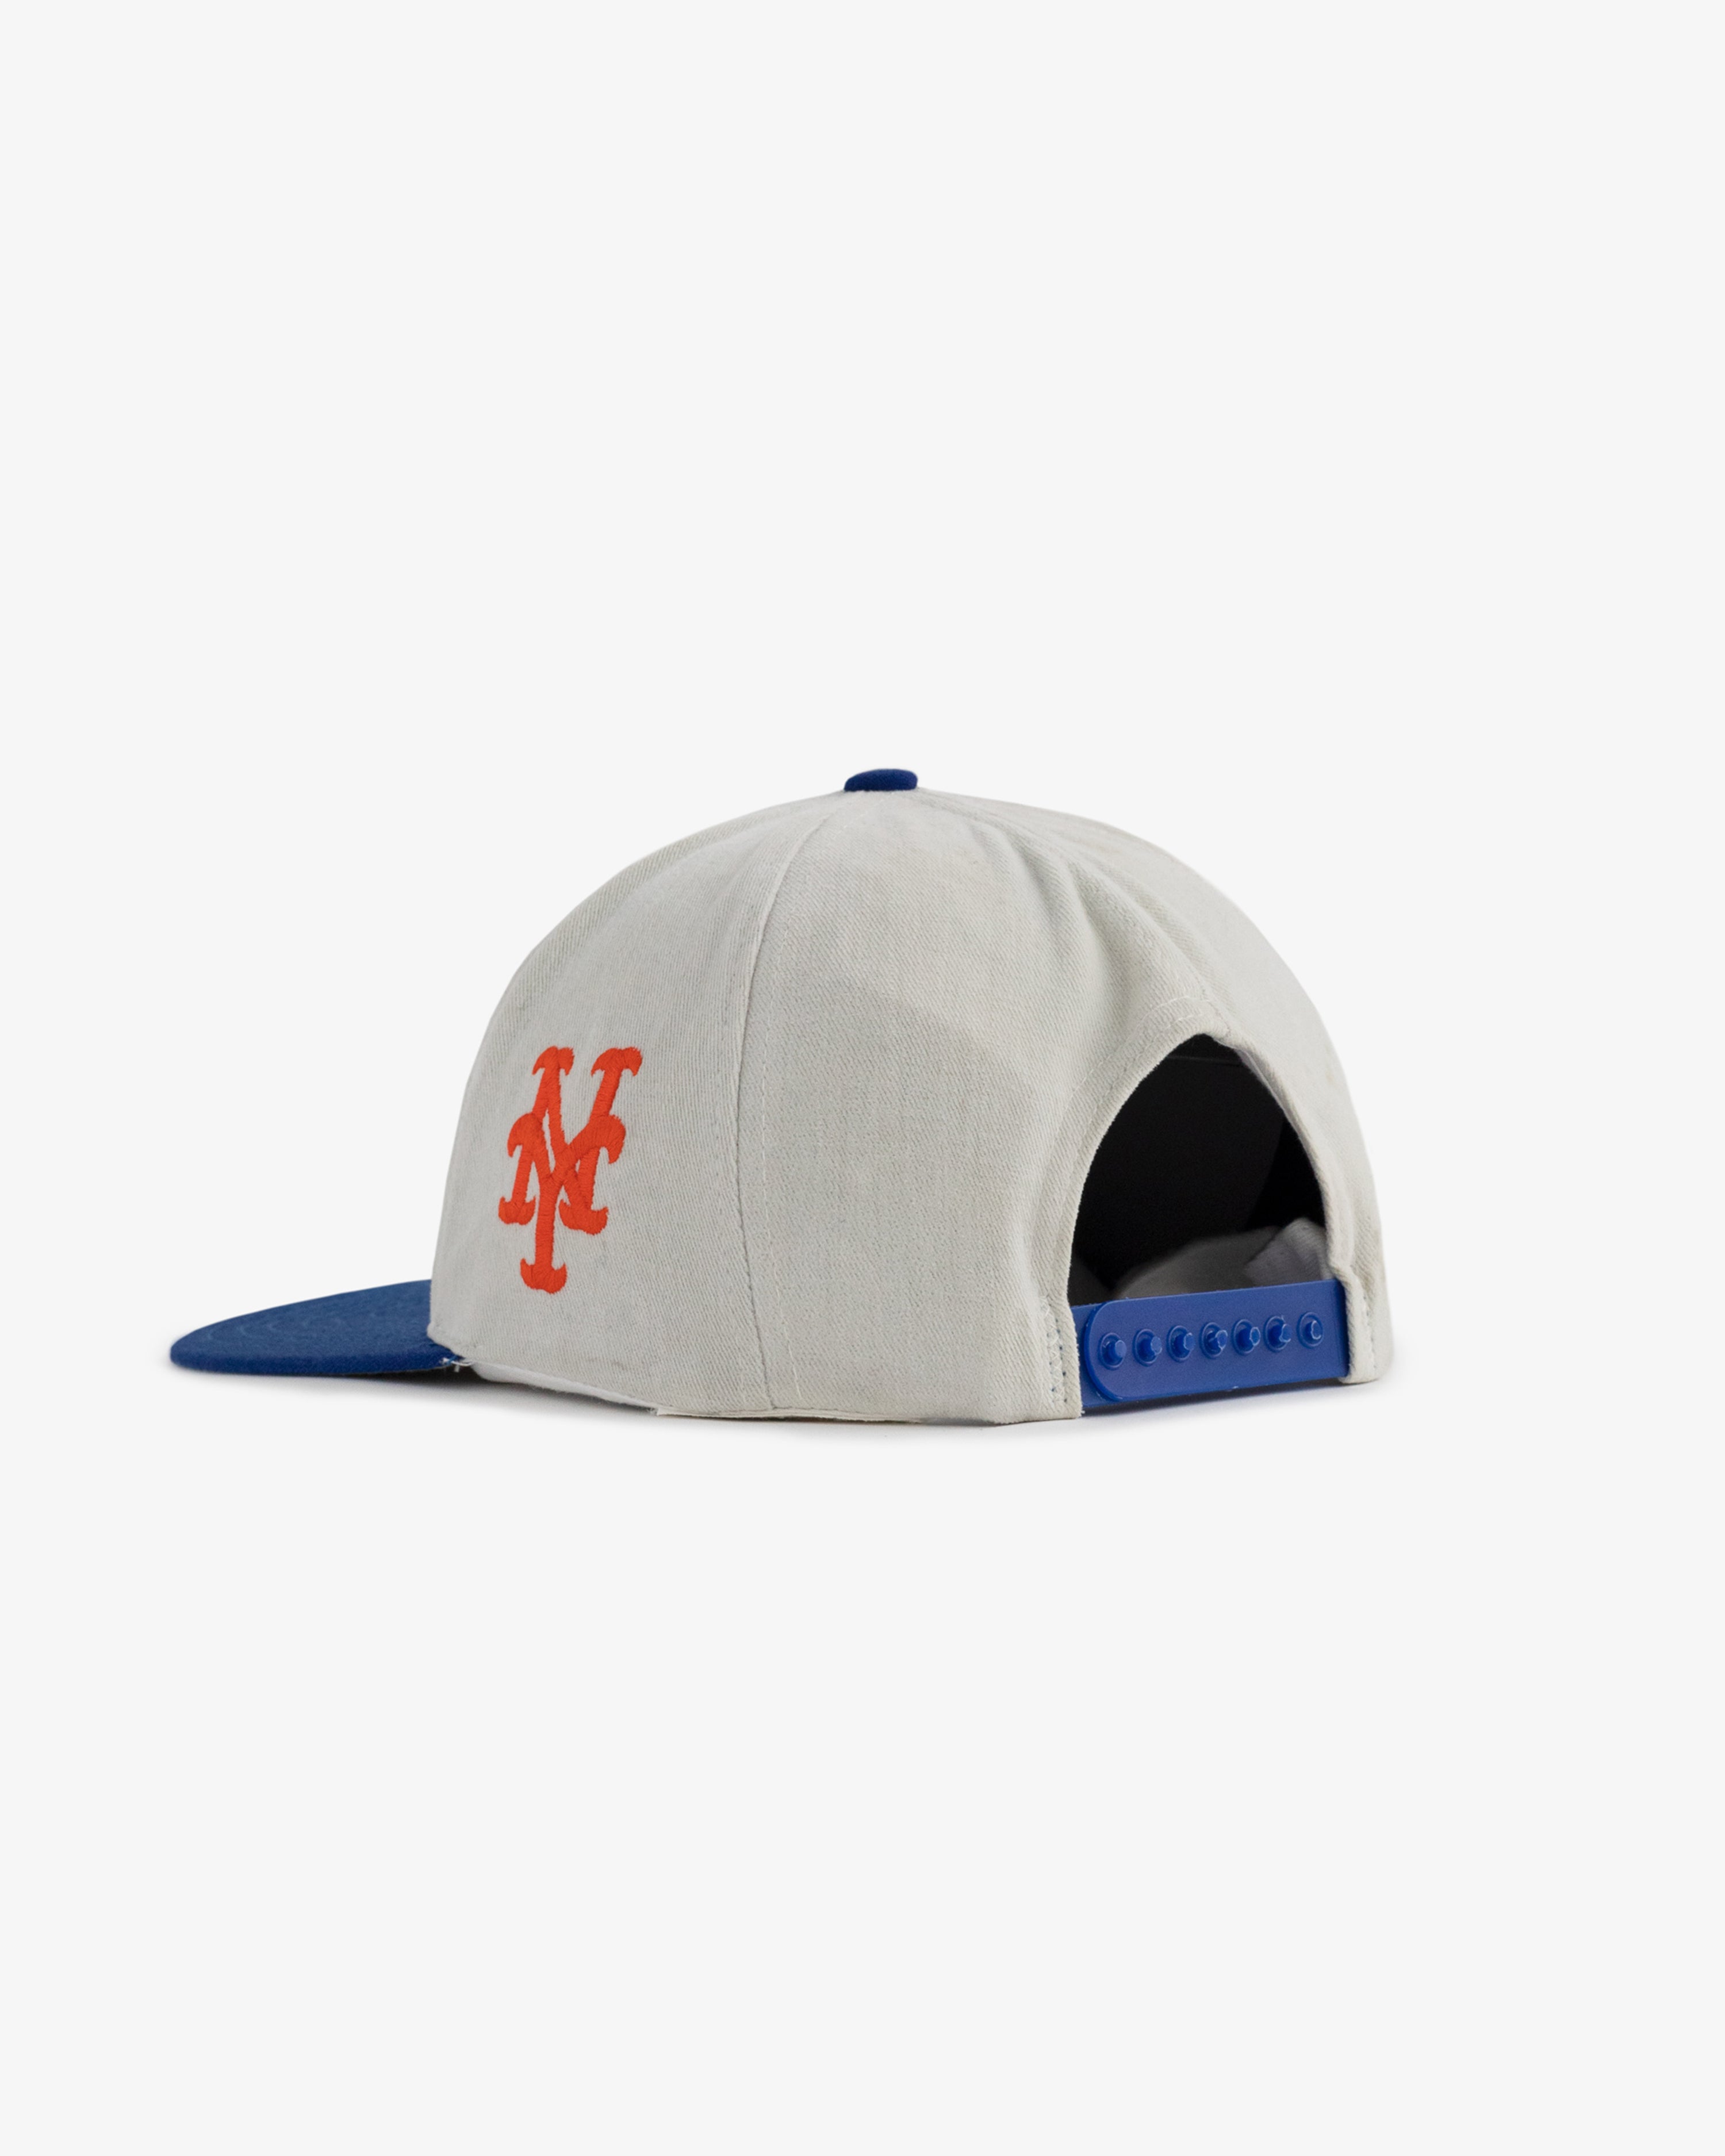 New York Mets Shea Stadium Hat